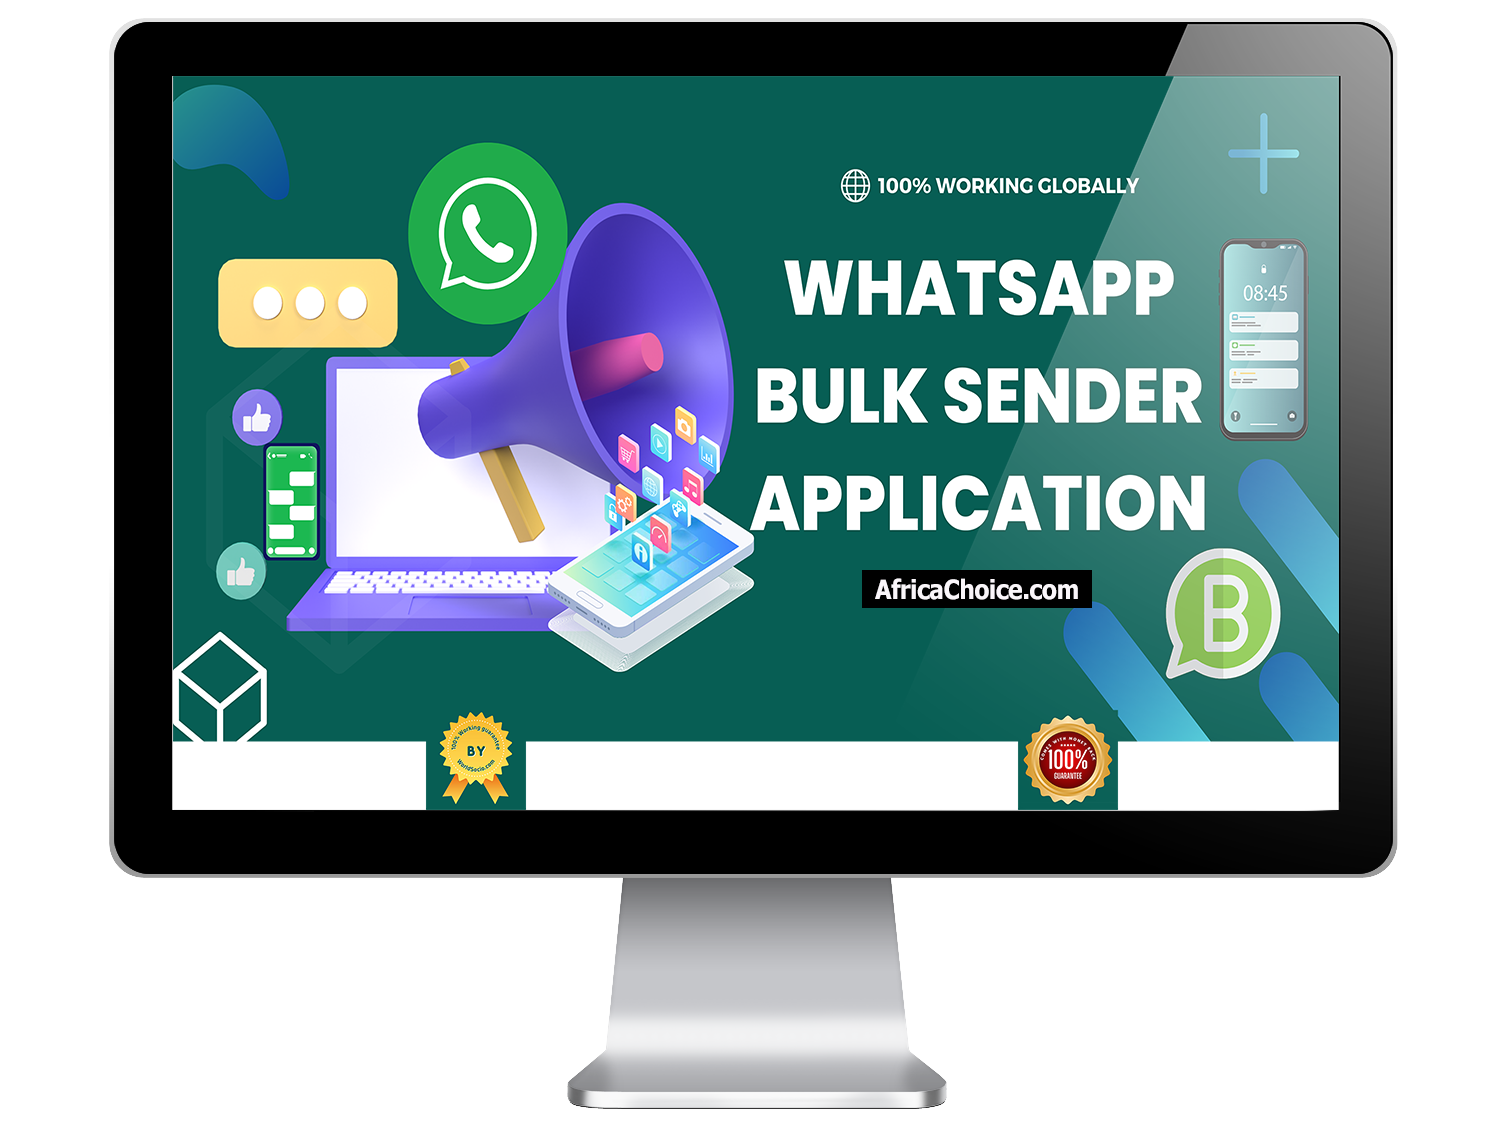 whatsapp-bulk-sender-application-png.1578